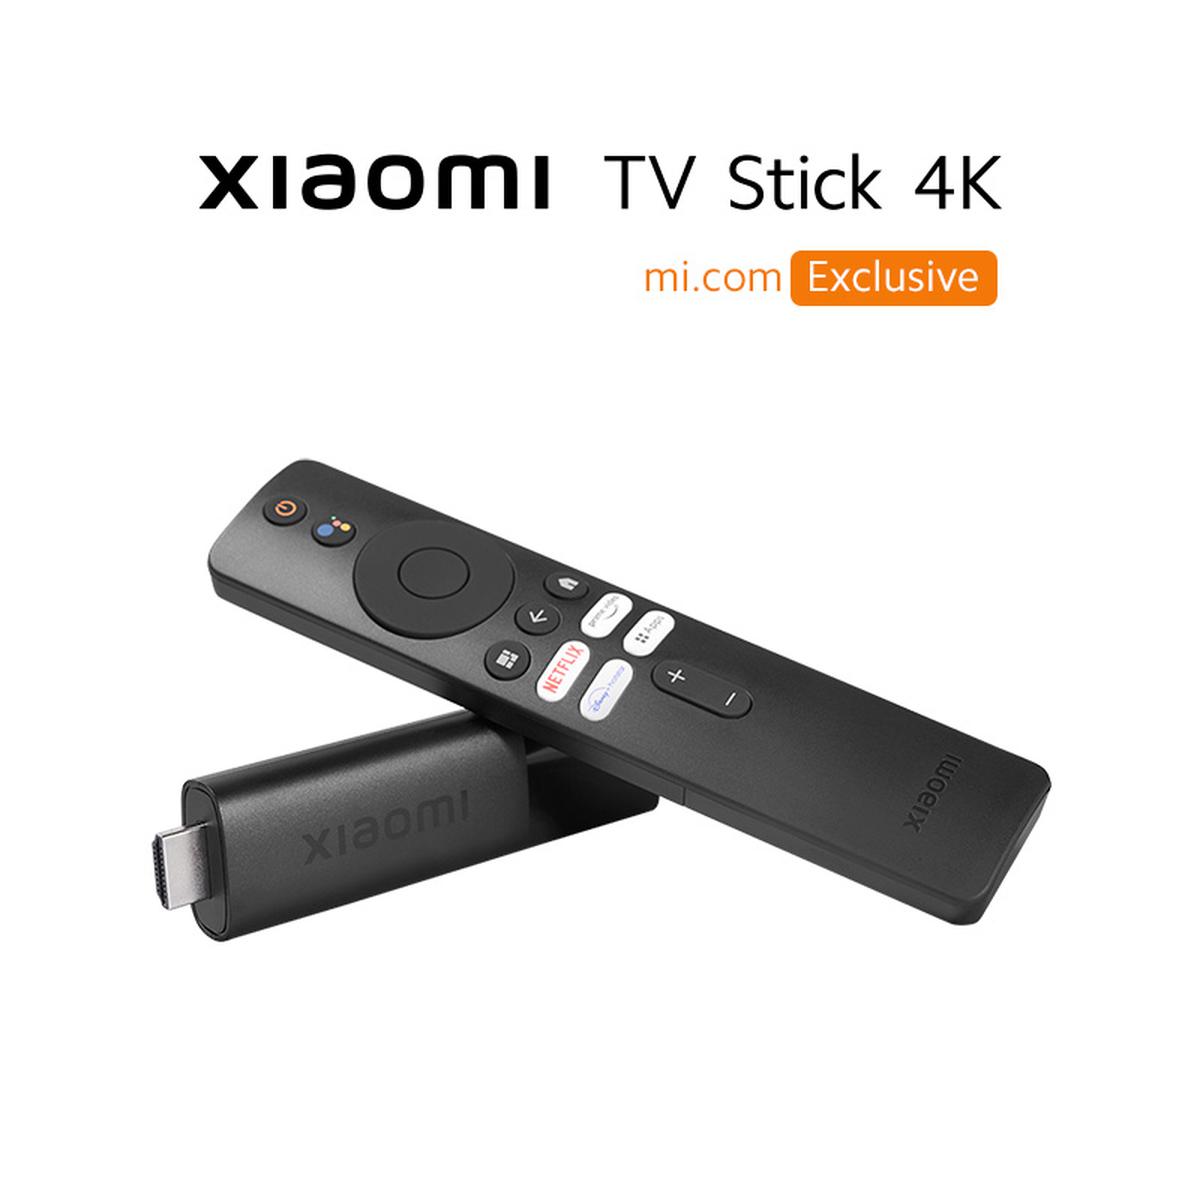 The NEW Xiaomi Mi TV Stick 4K !! Worth the Upgrade ?? 